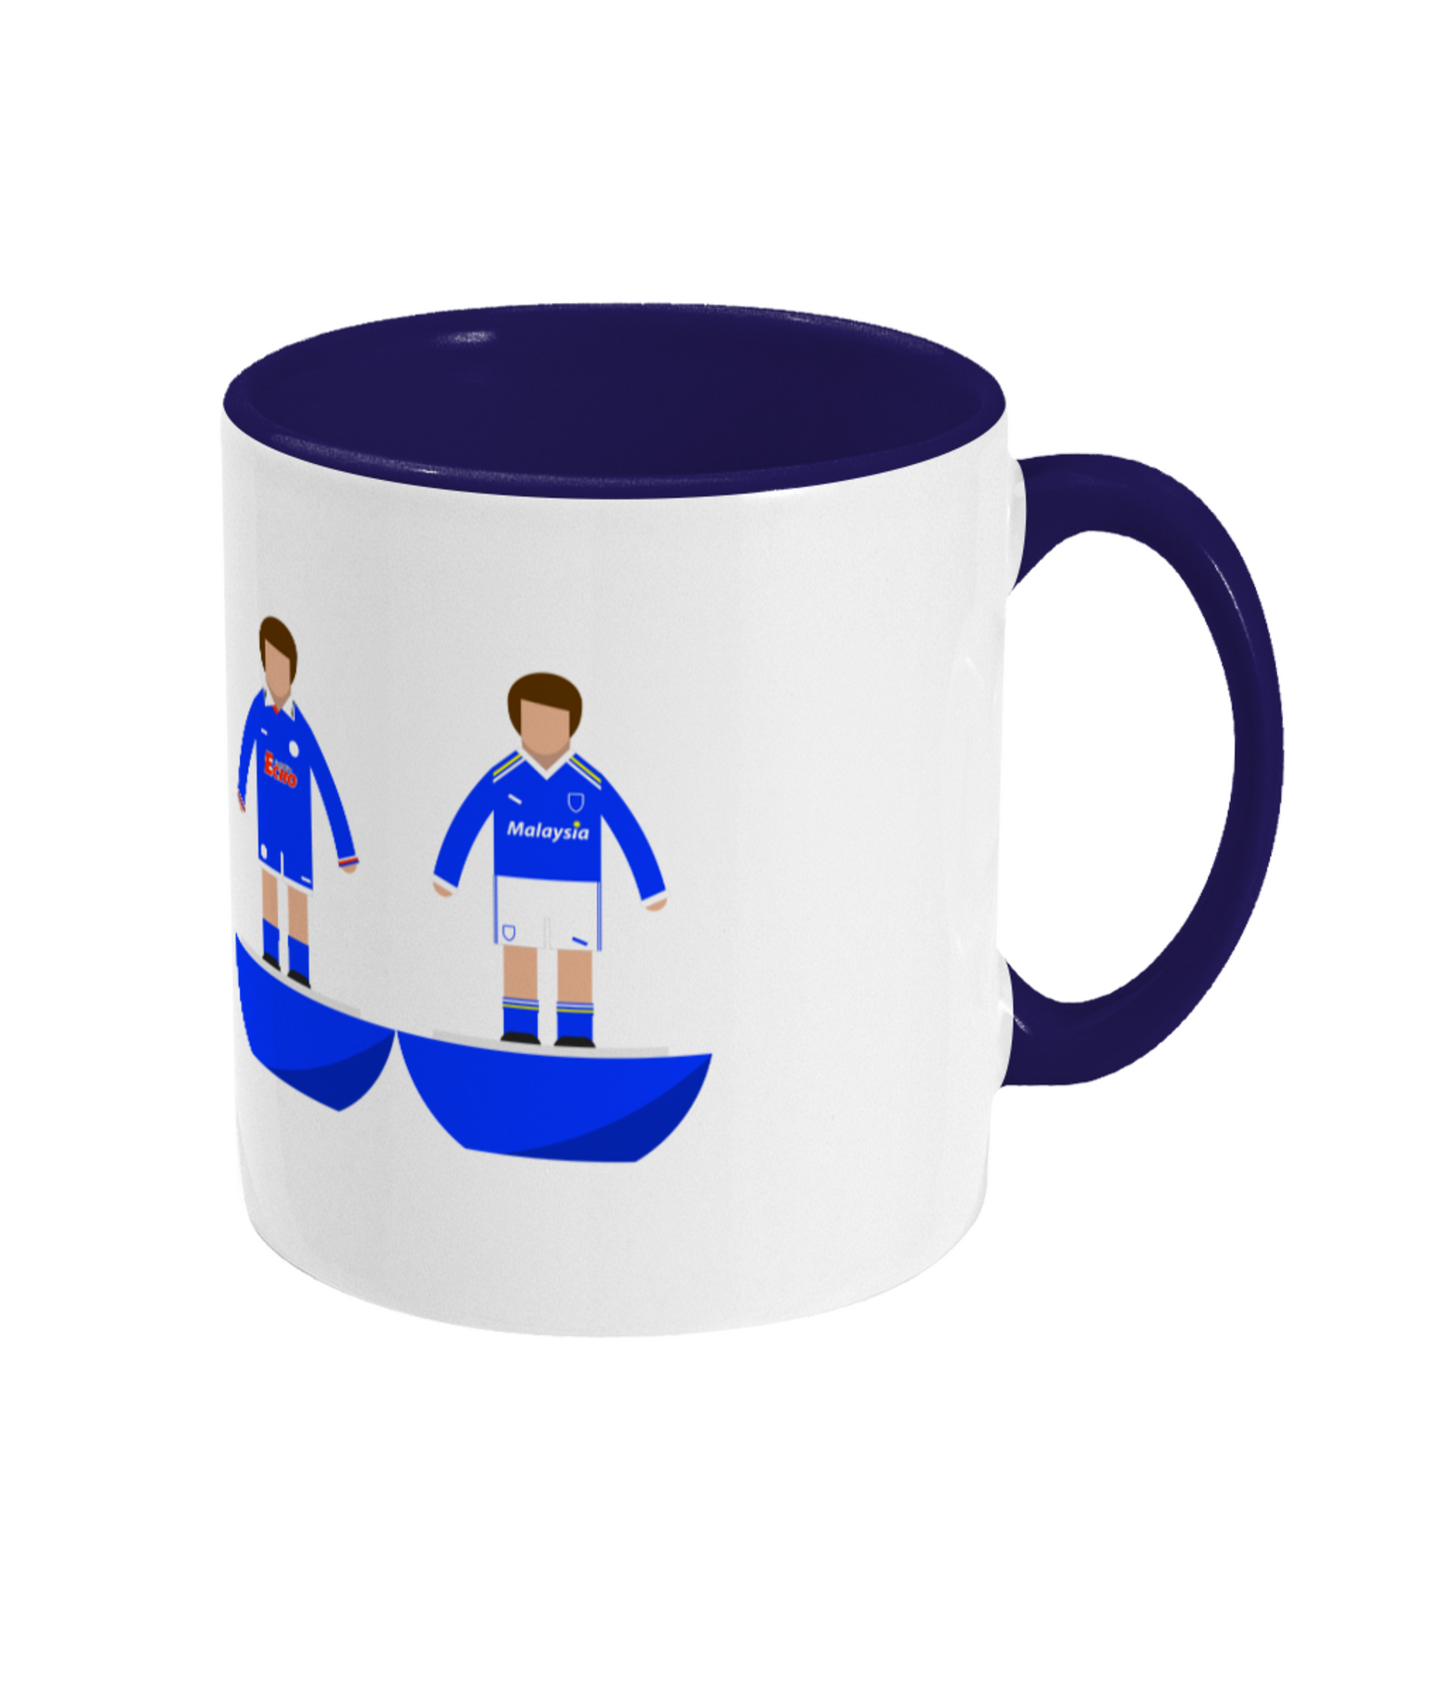 Football Kits 'Cardiff City combined' Mug